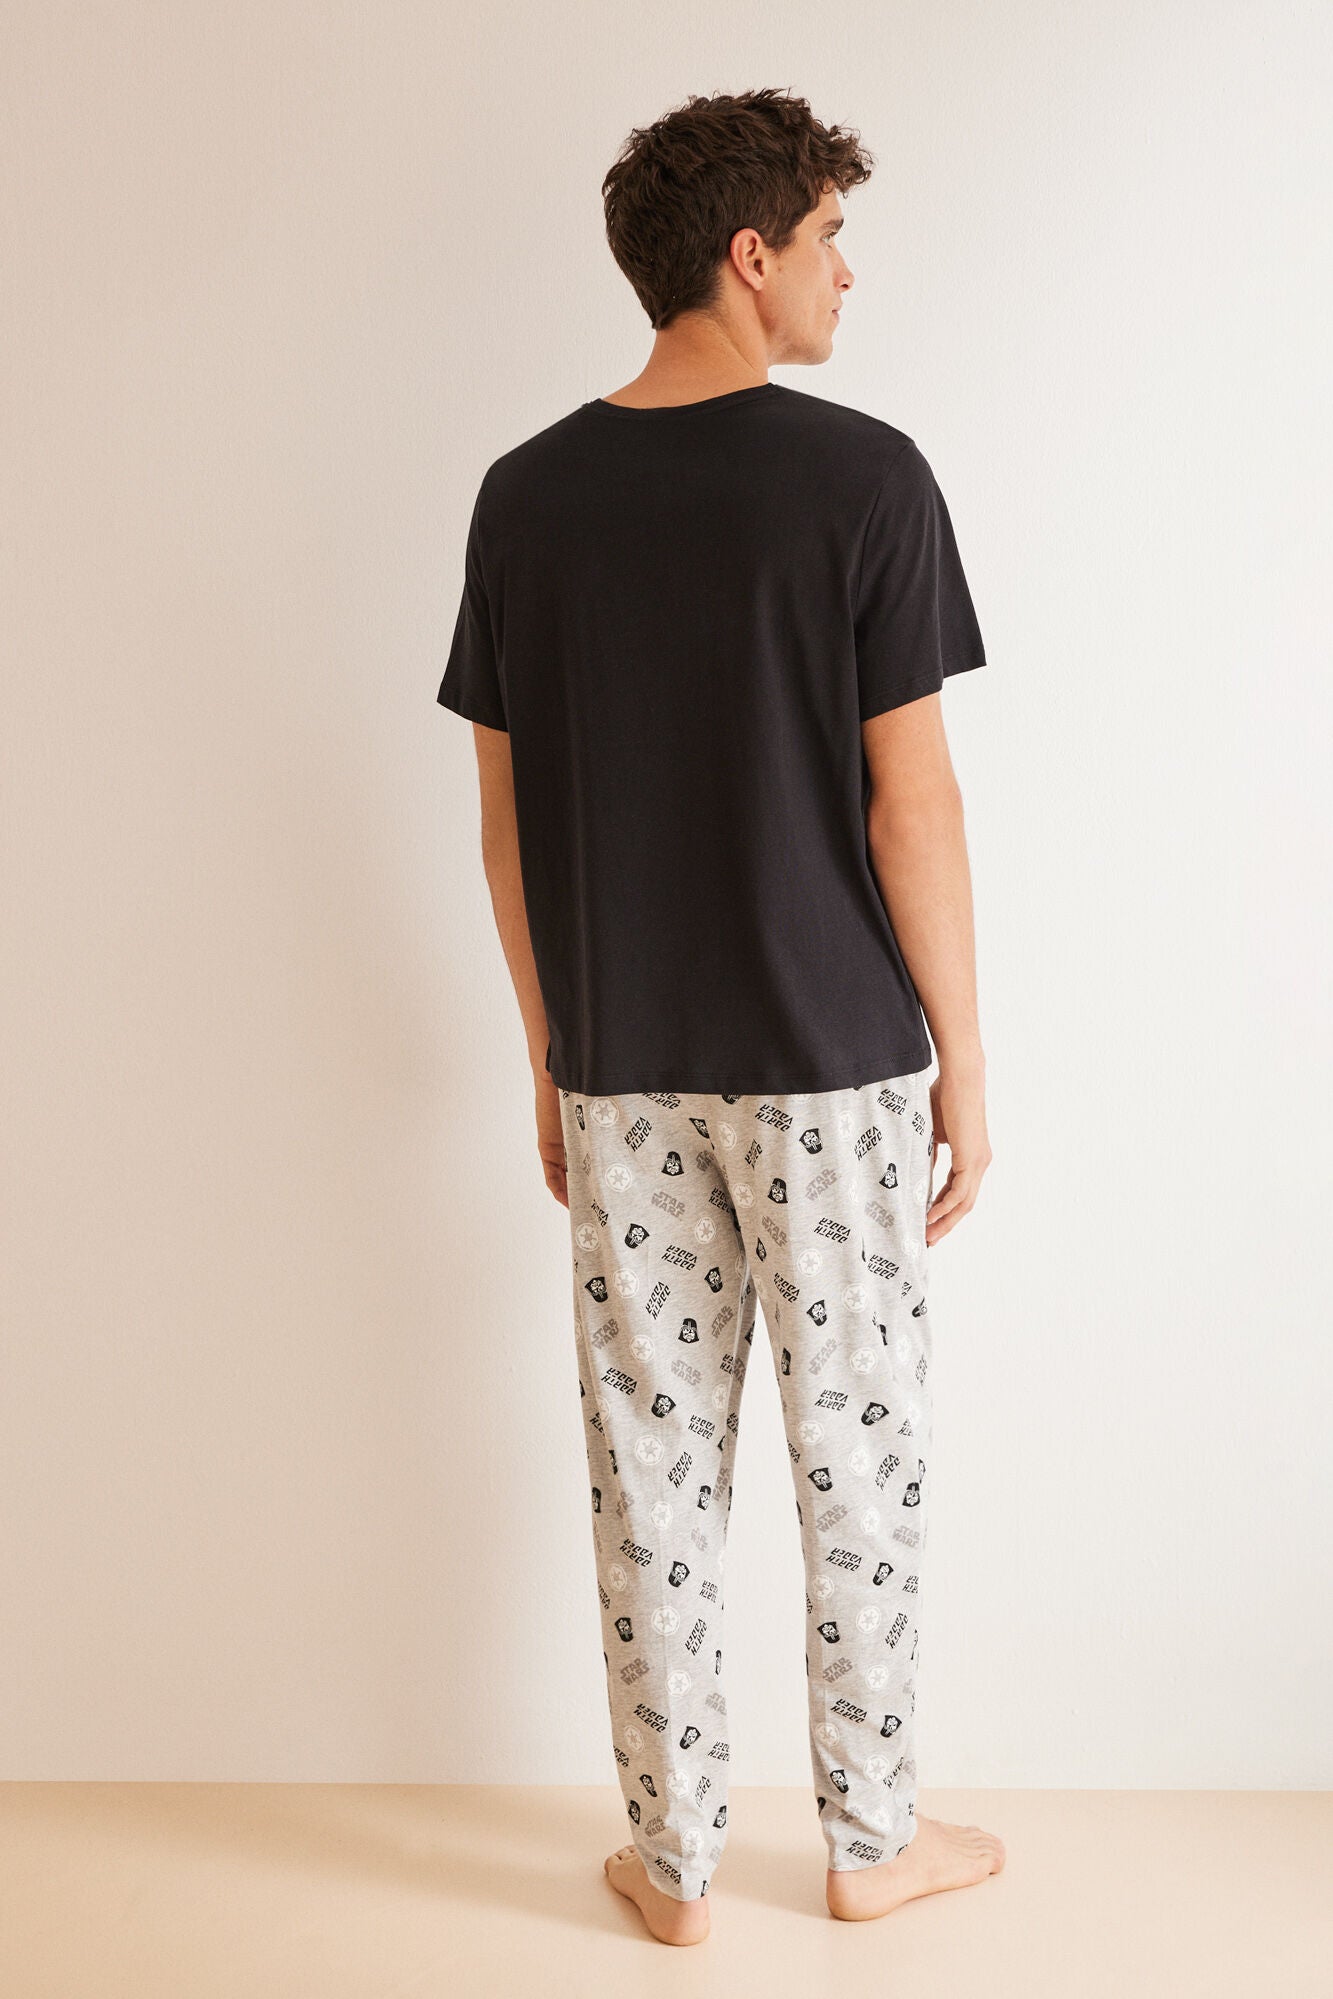 Men's 100% cotton Star Wars pajamas